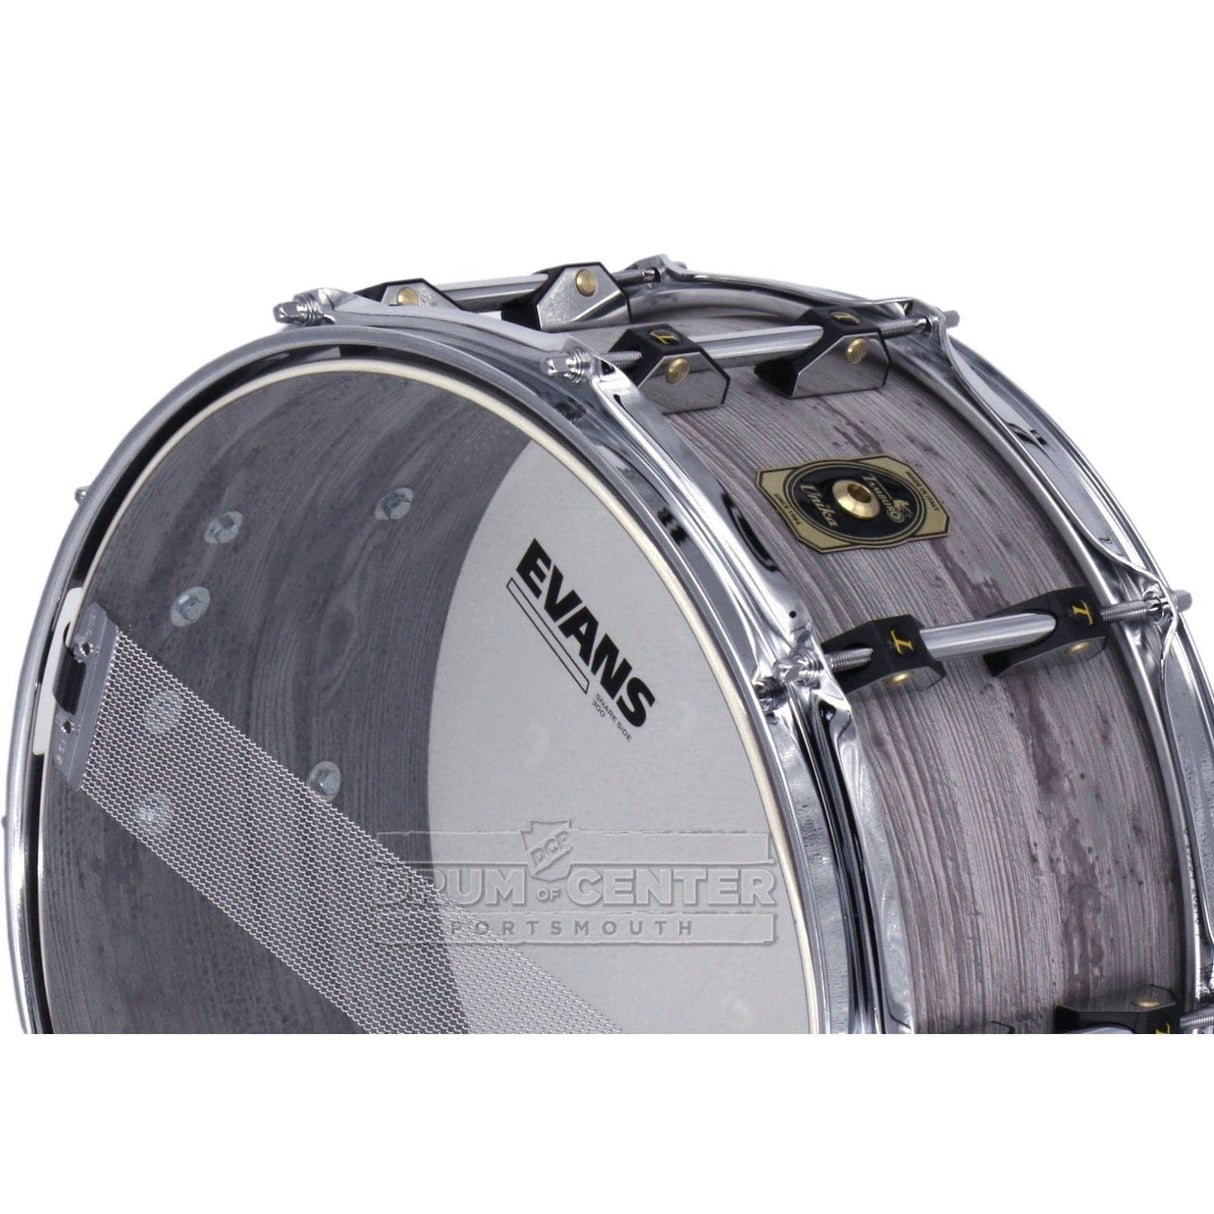 Tamburo Unika Series Snare Drum 14x6.5 Vintage